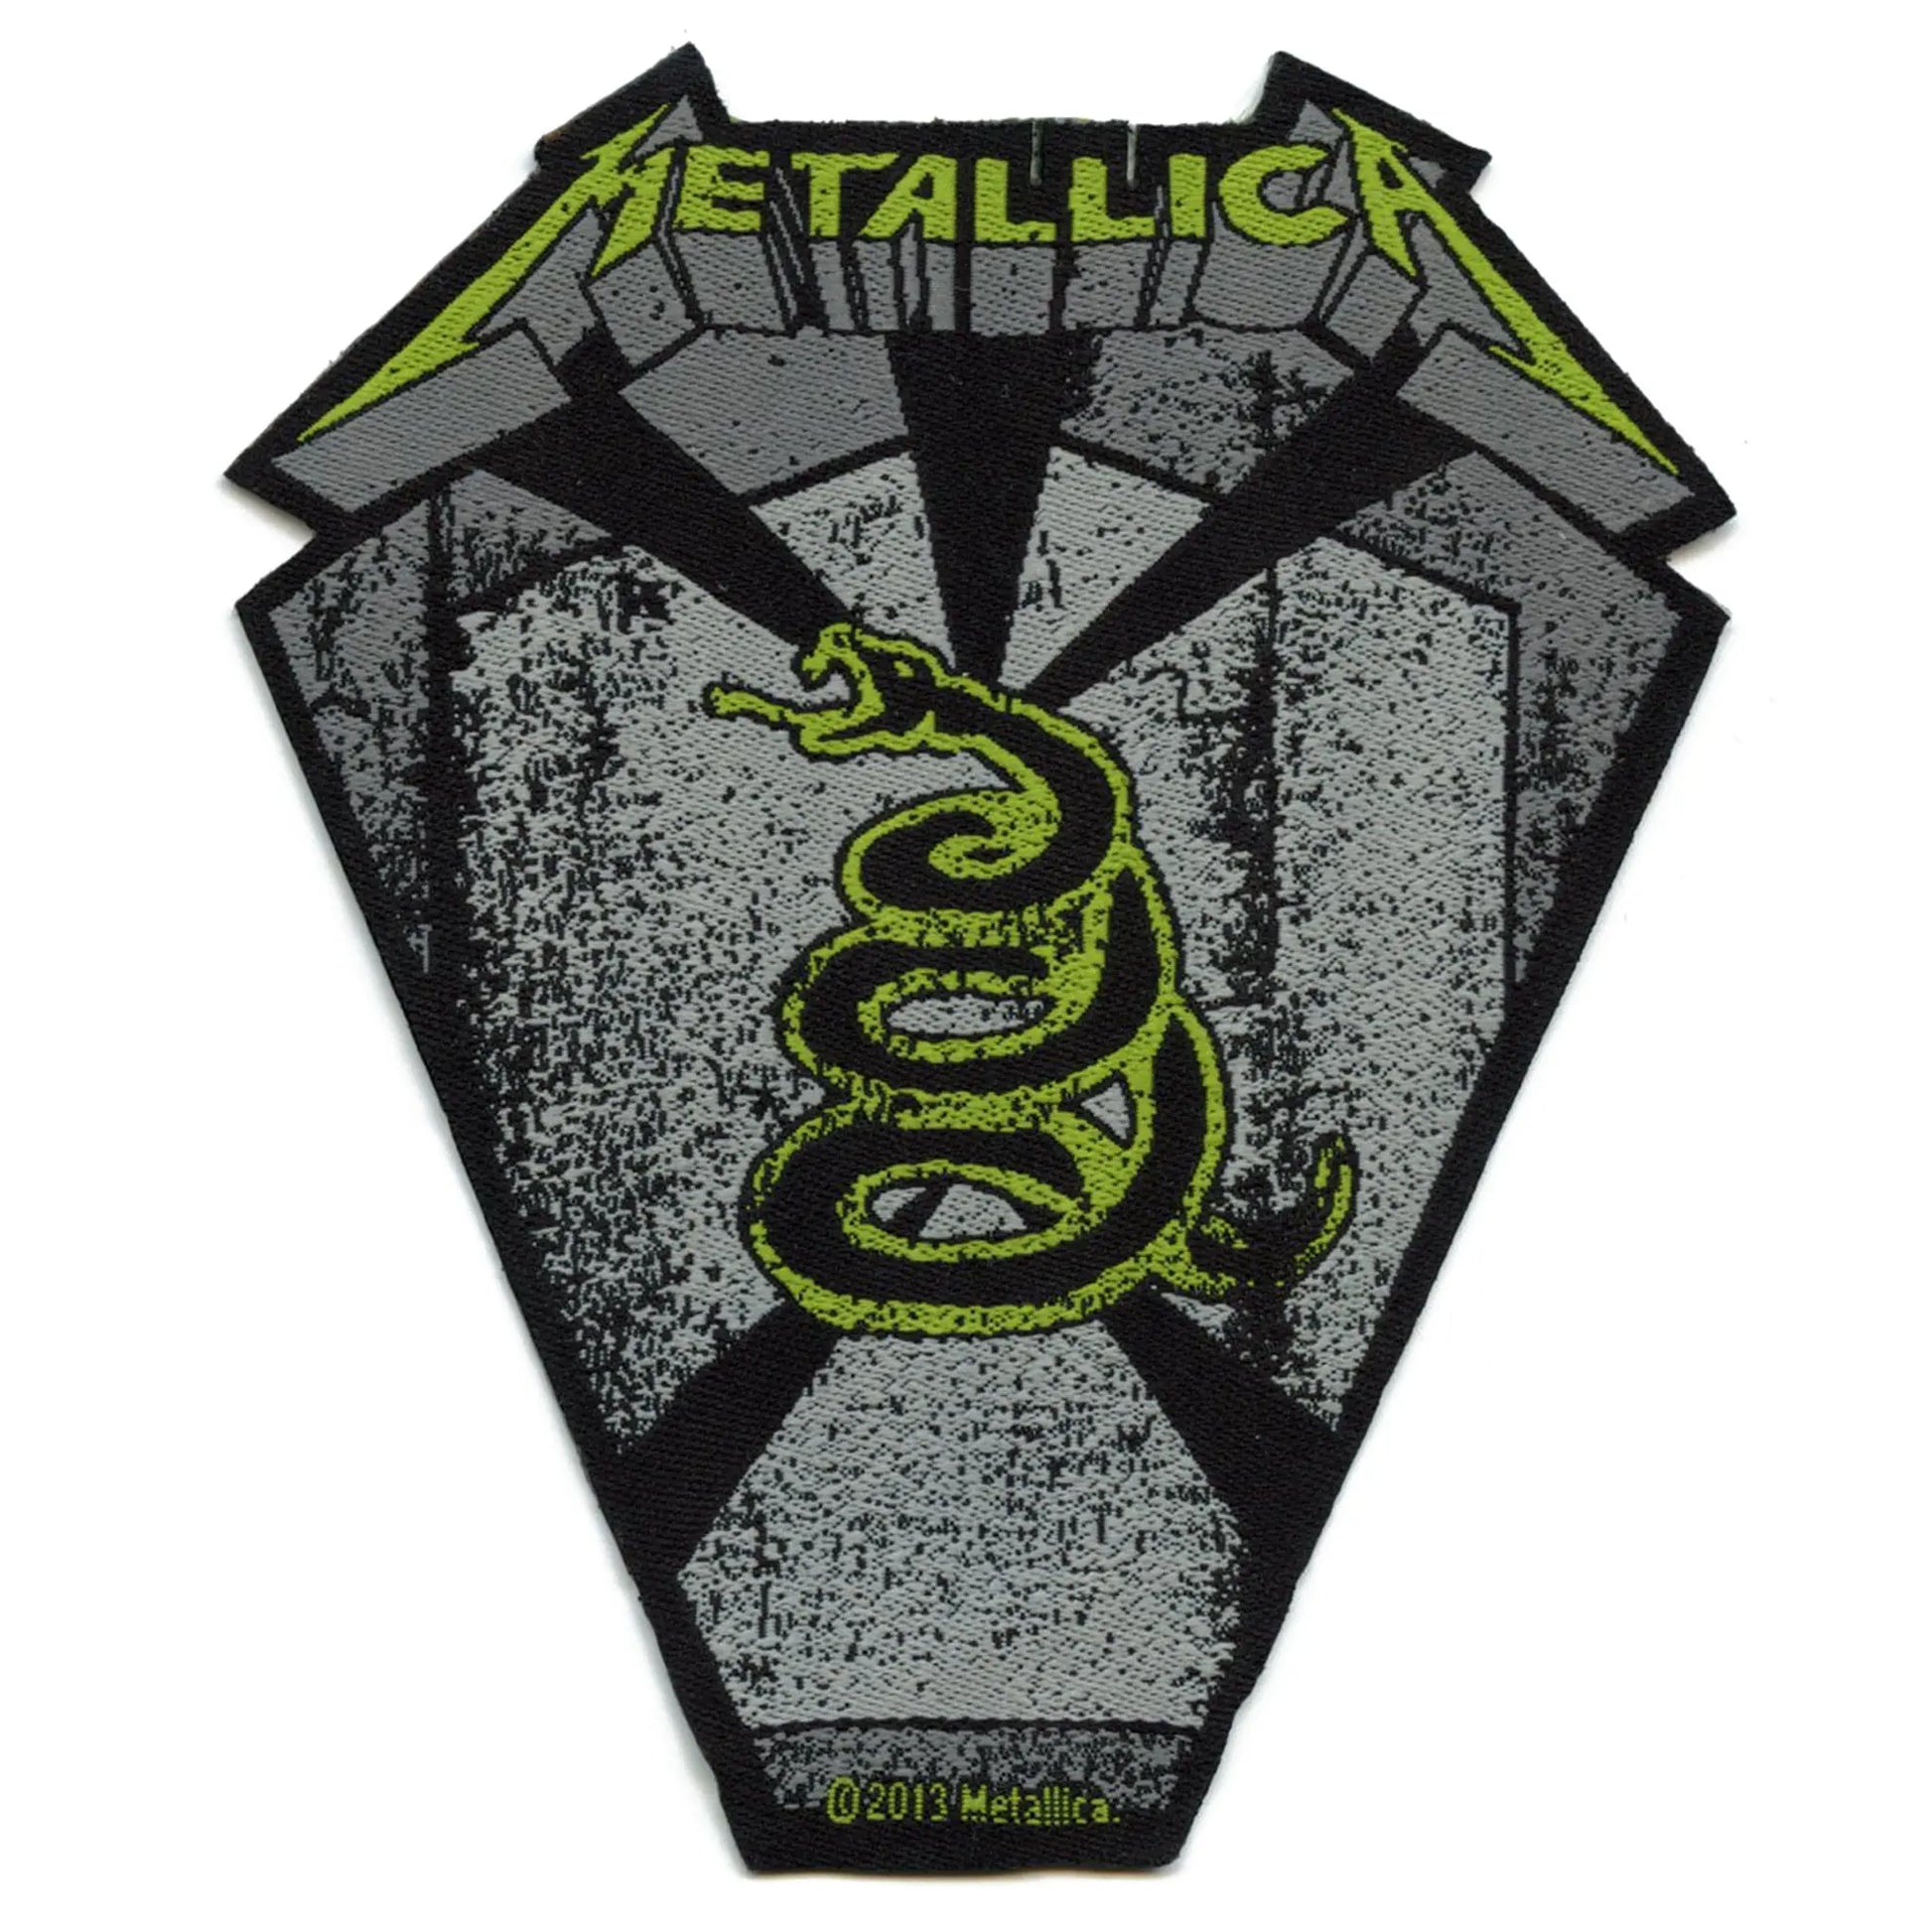 San Francisco Giants Metallica Patch